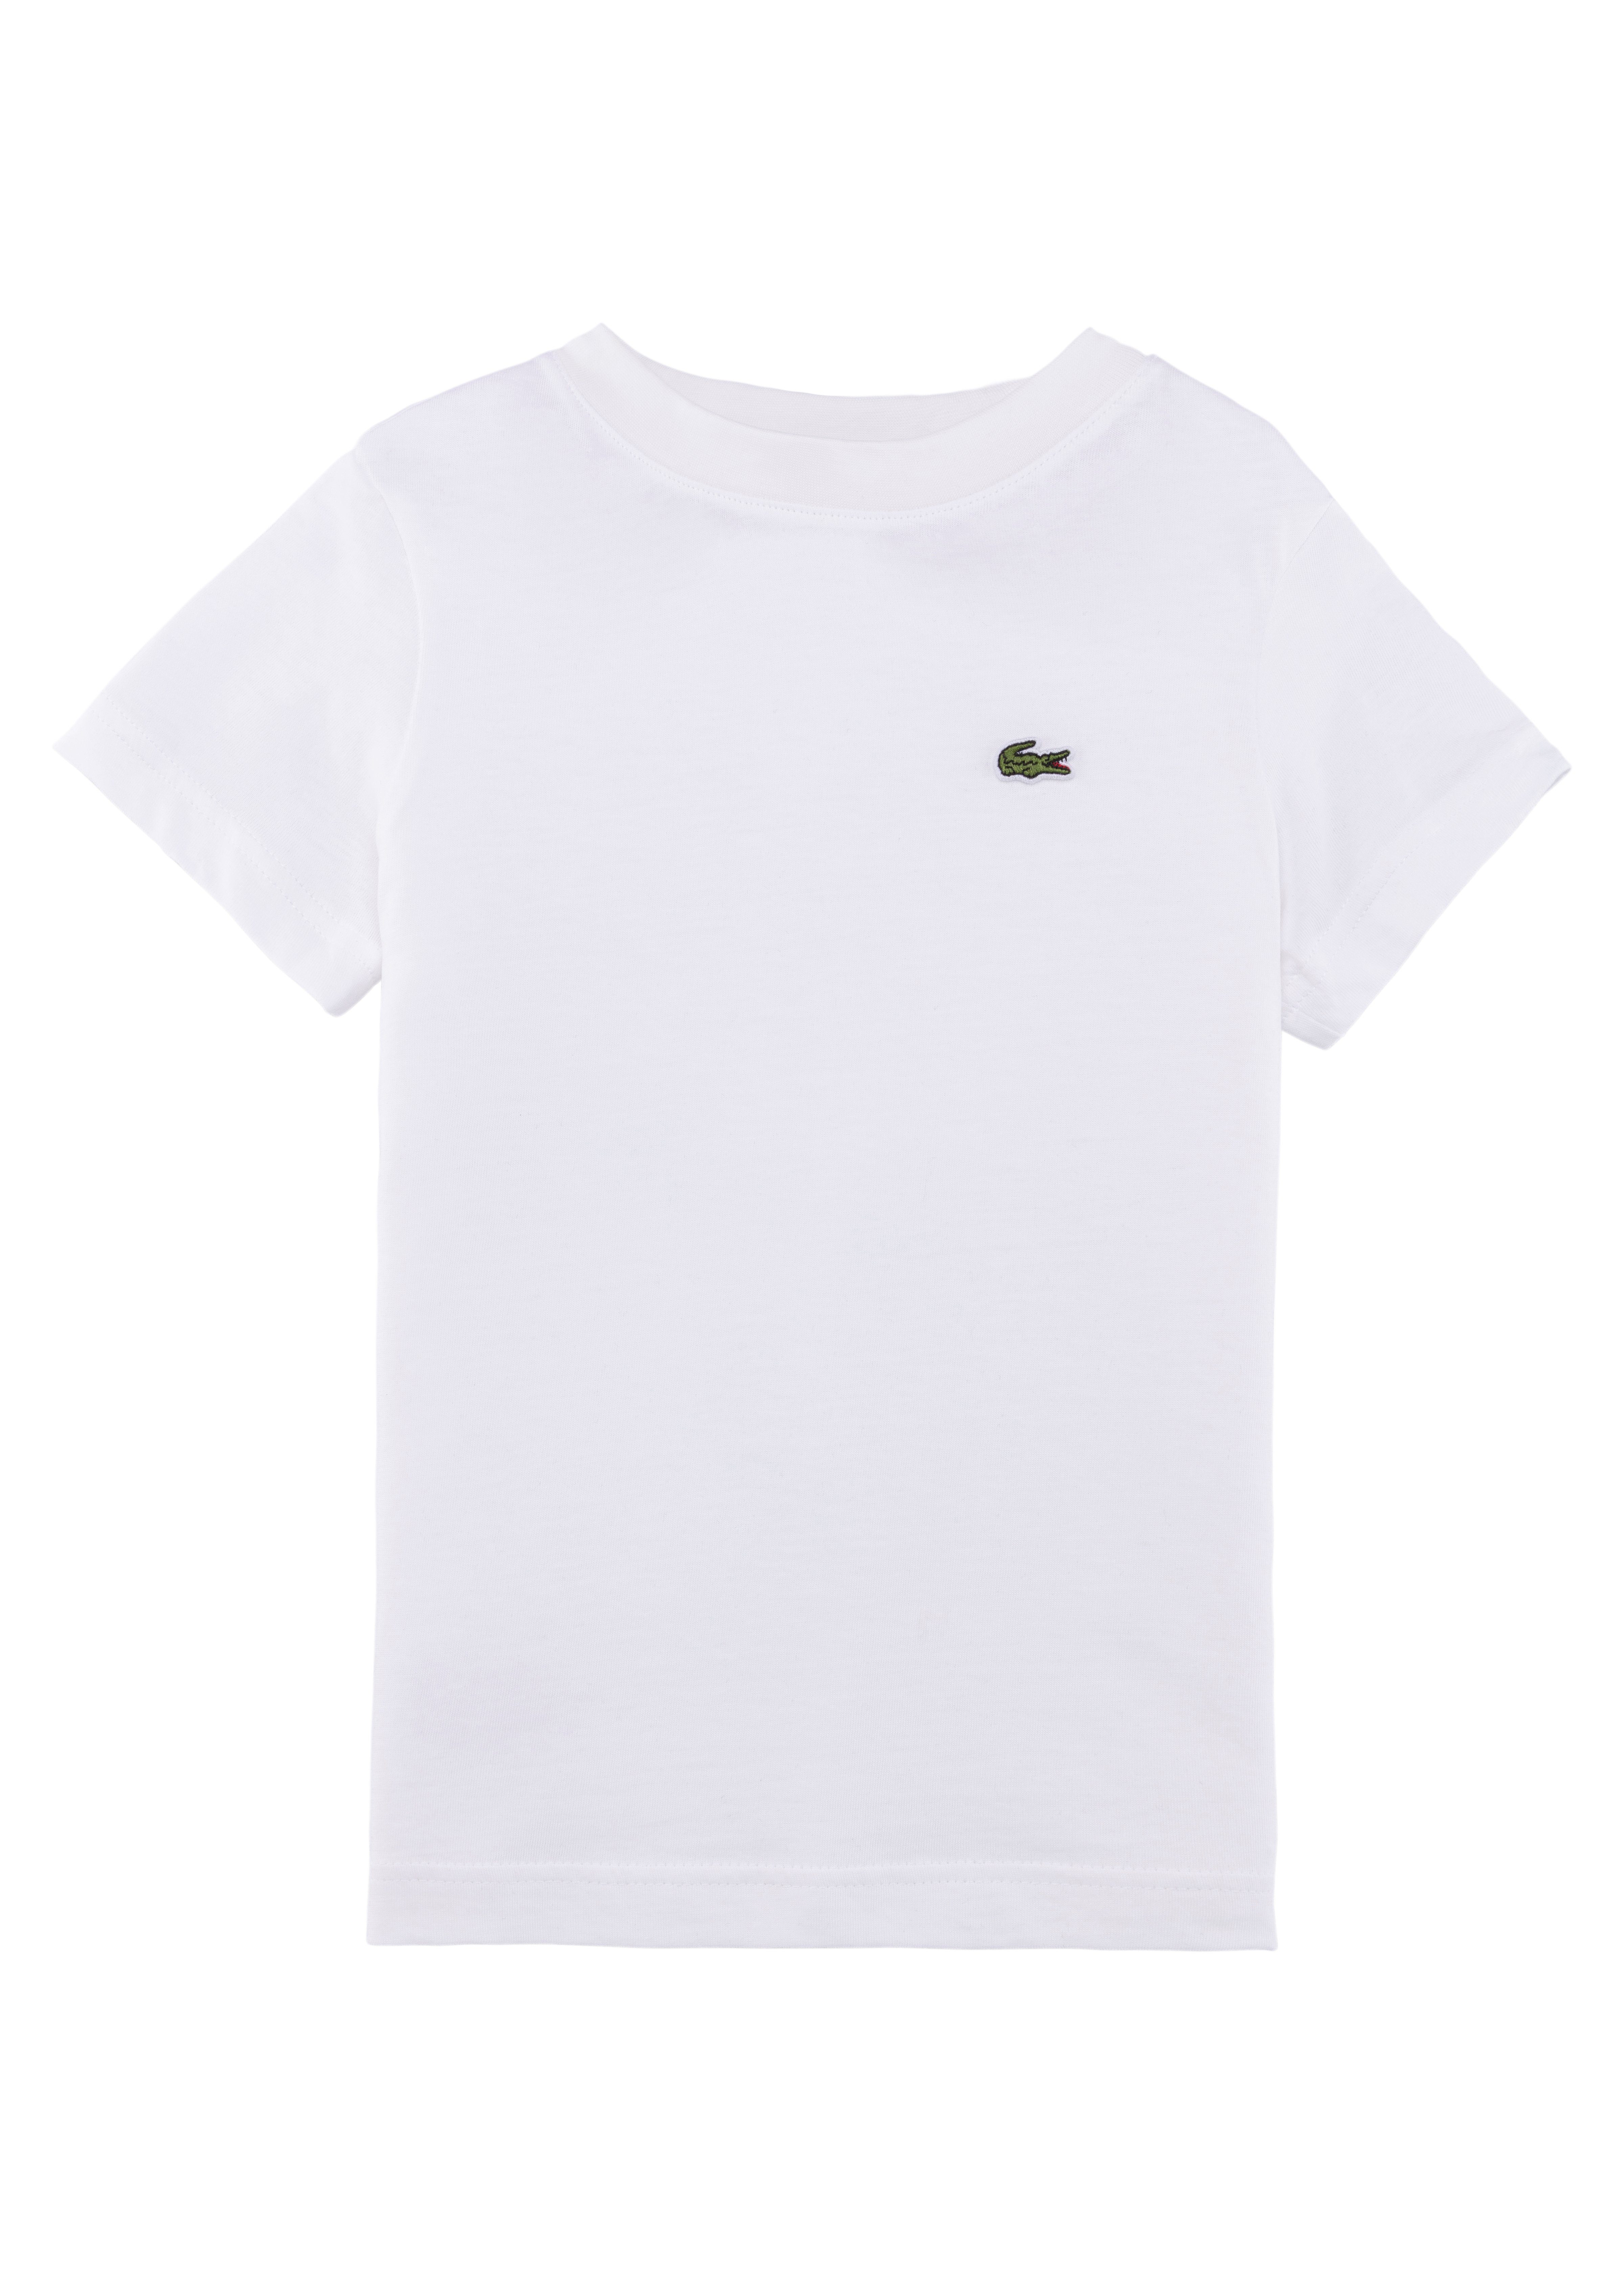 Lacoste T-Shirt mit WHITE Lacoste-Krokodil Brusthöhe auf